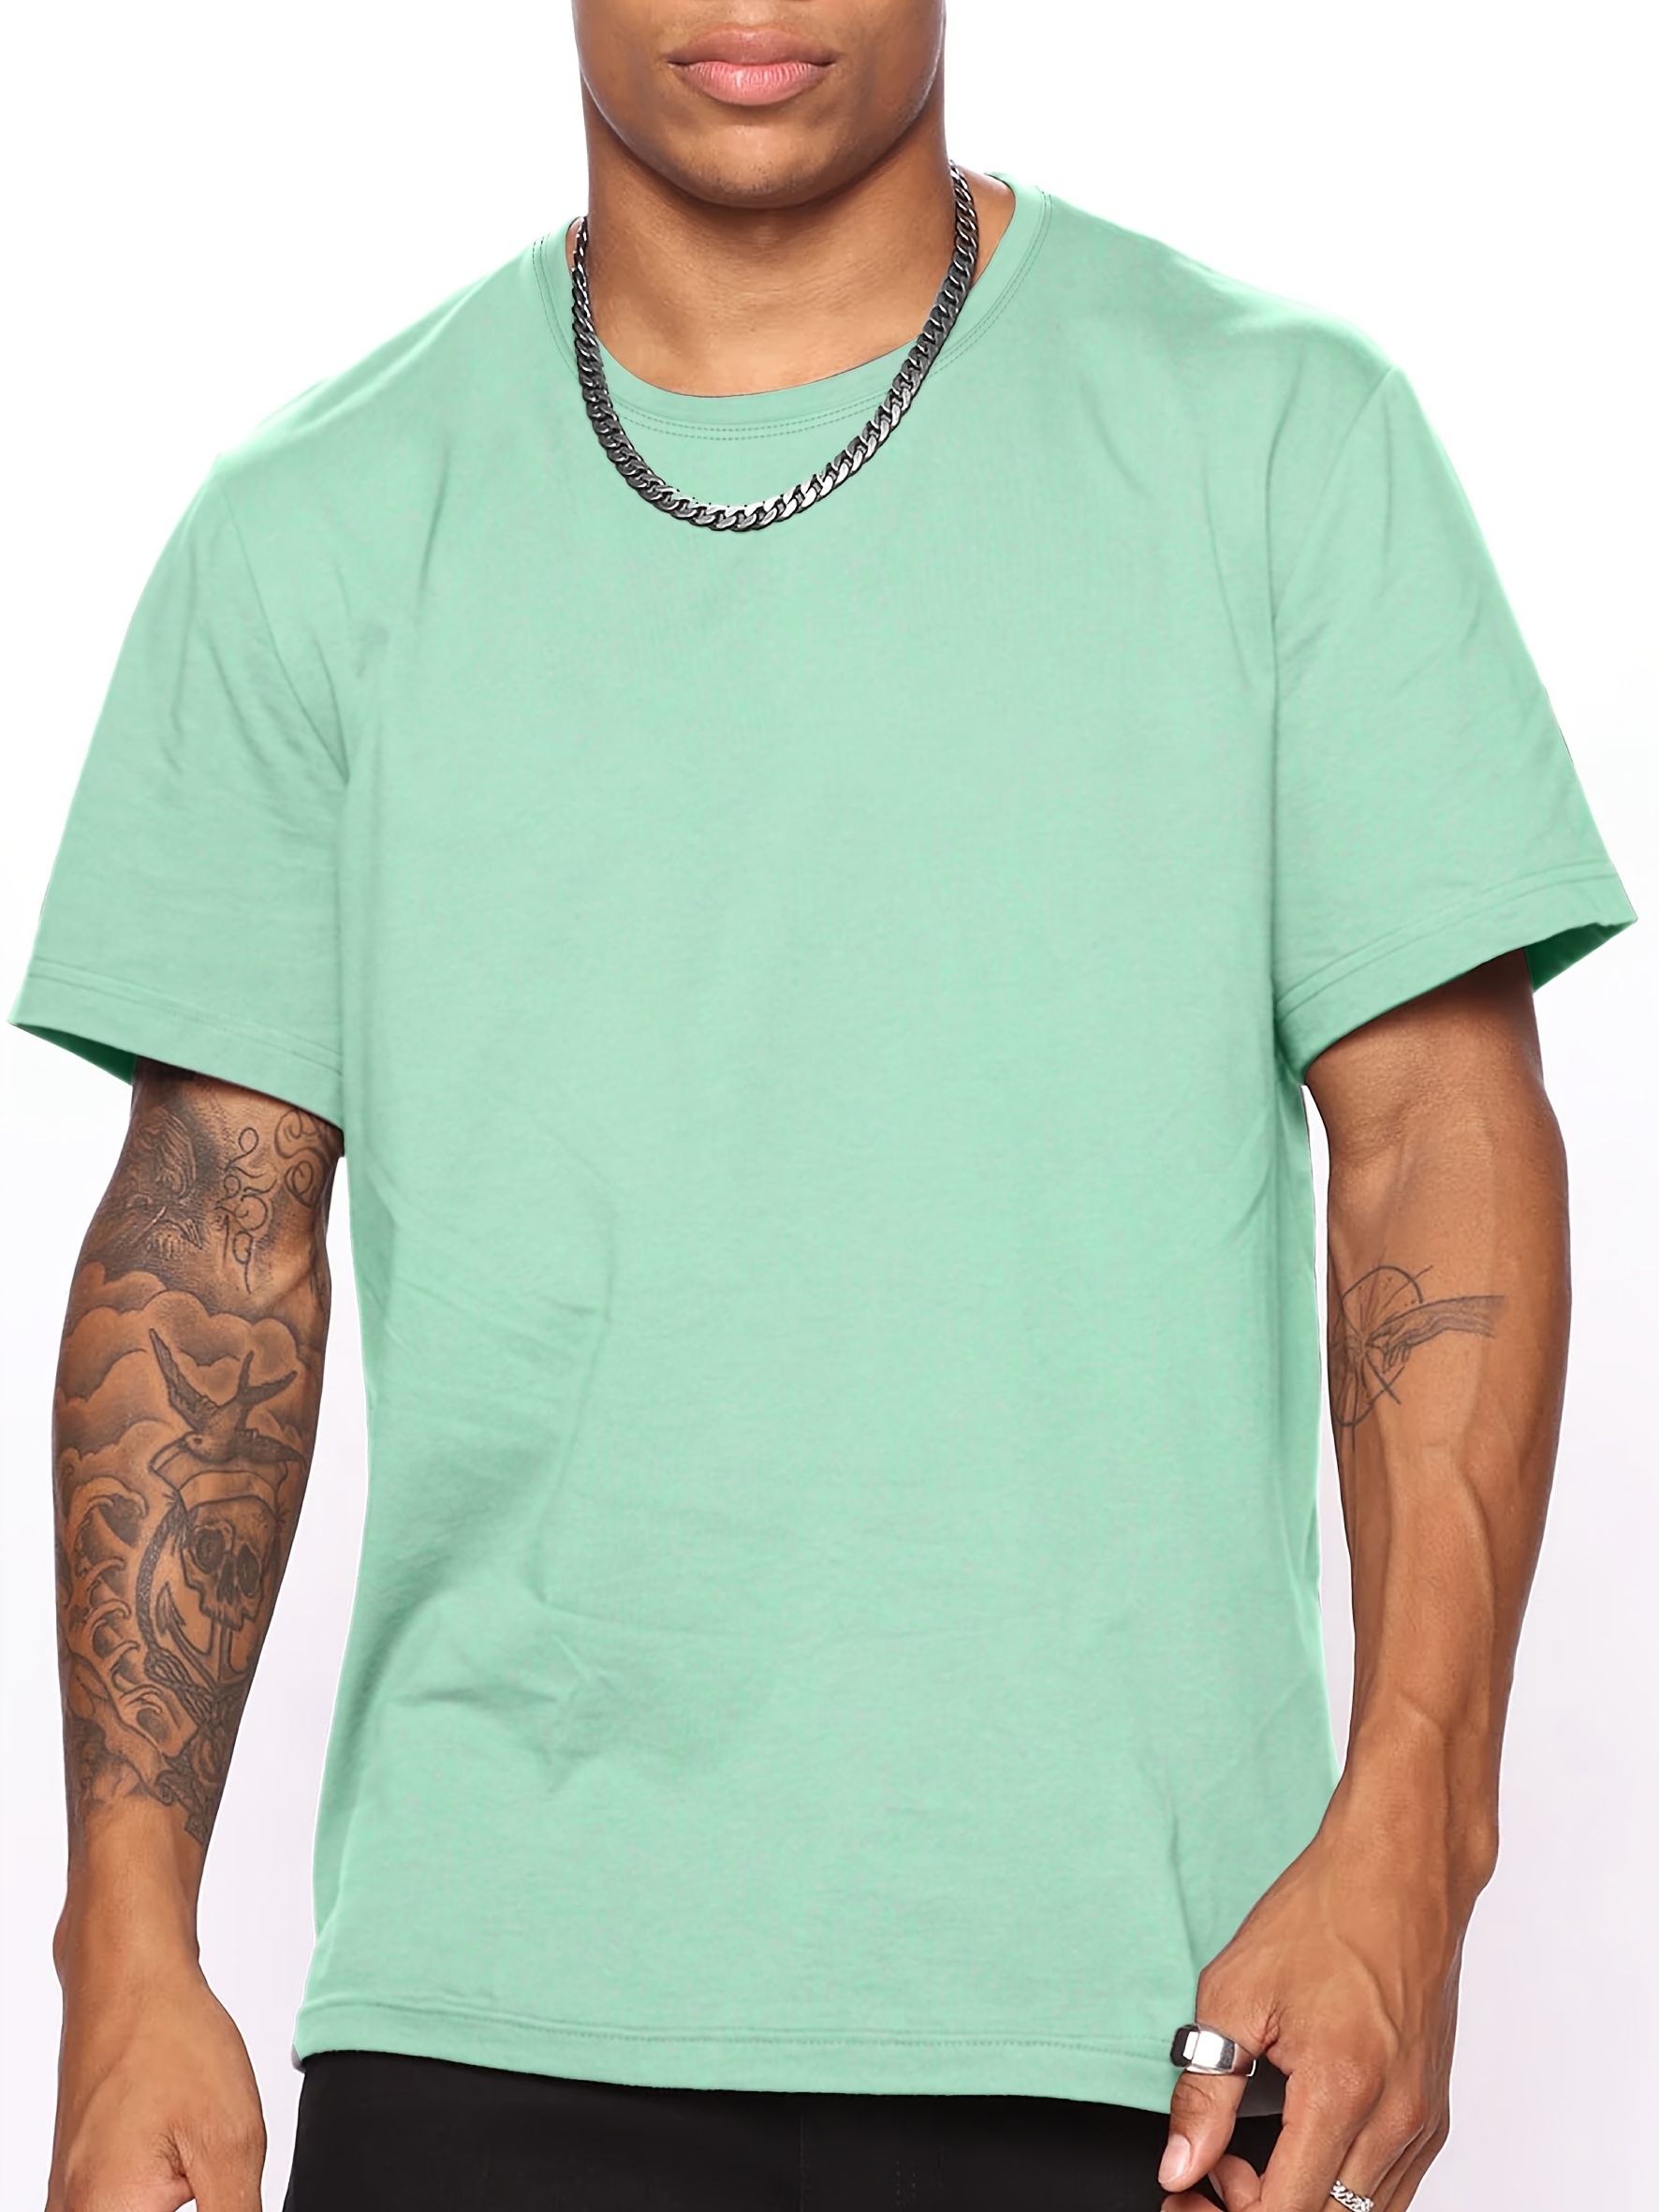 Chicago Basketball Team T Shirt Mens Anime Oversize Crewneck Hip Hop Loose  Tee Clothing Casual High